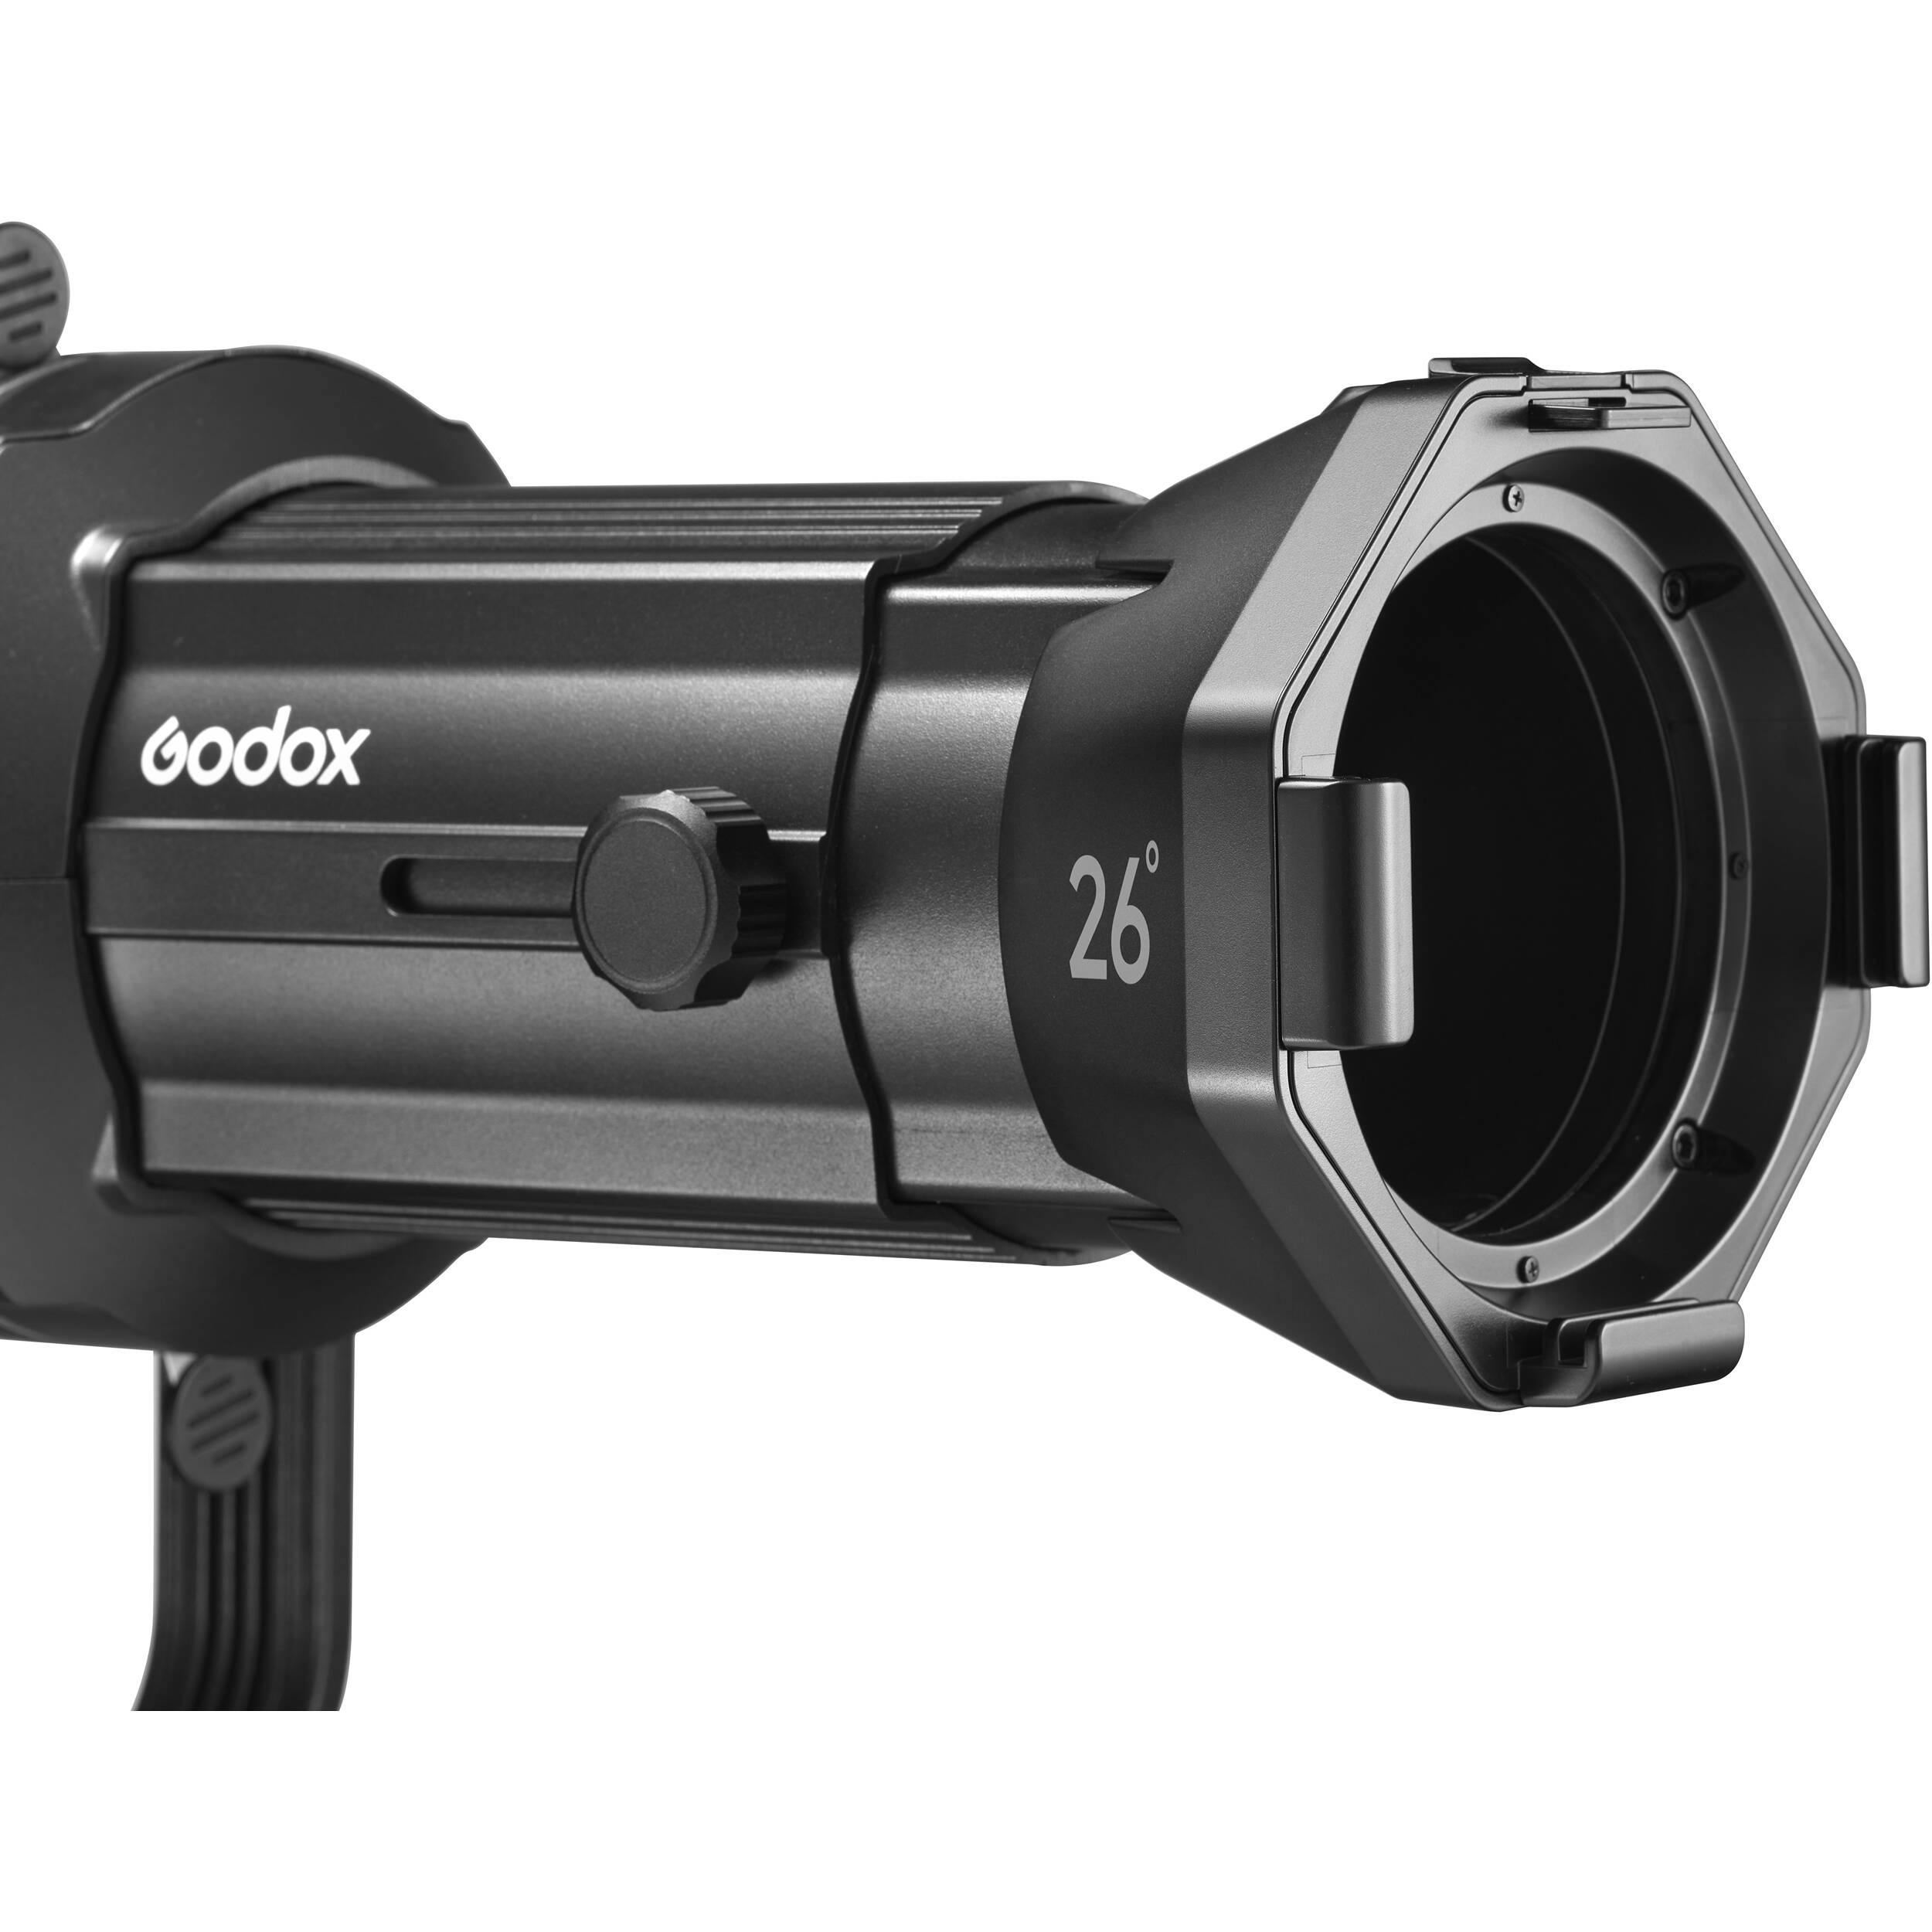    Godox VSA-26K   26   Ultra-mart